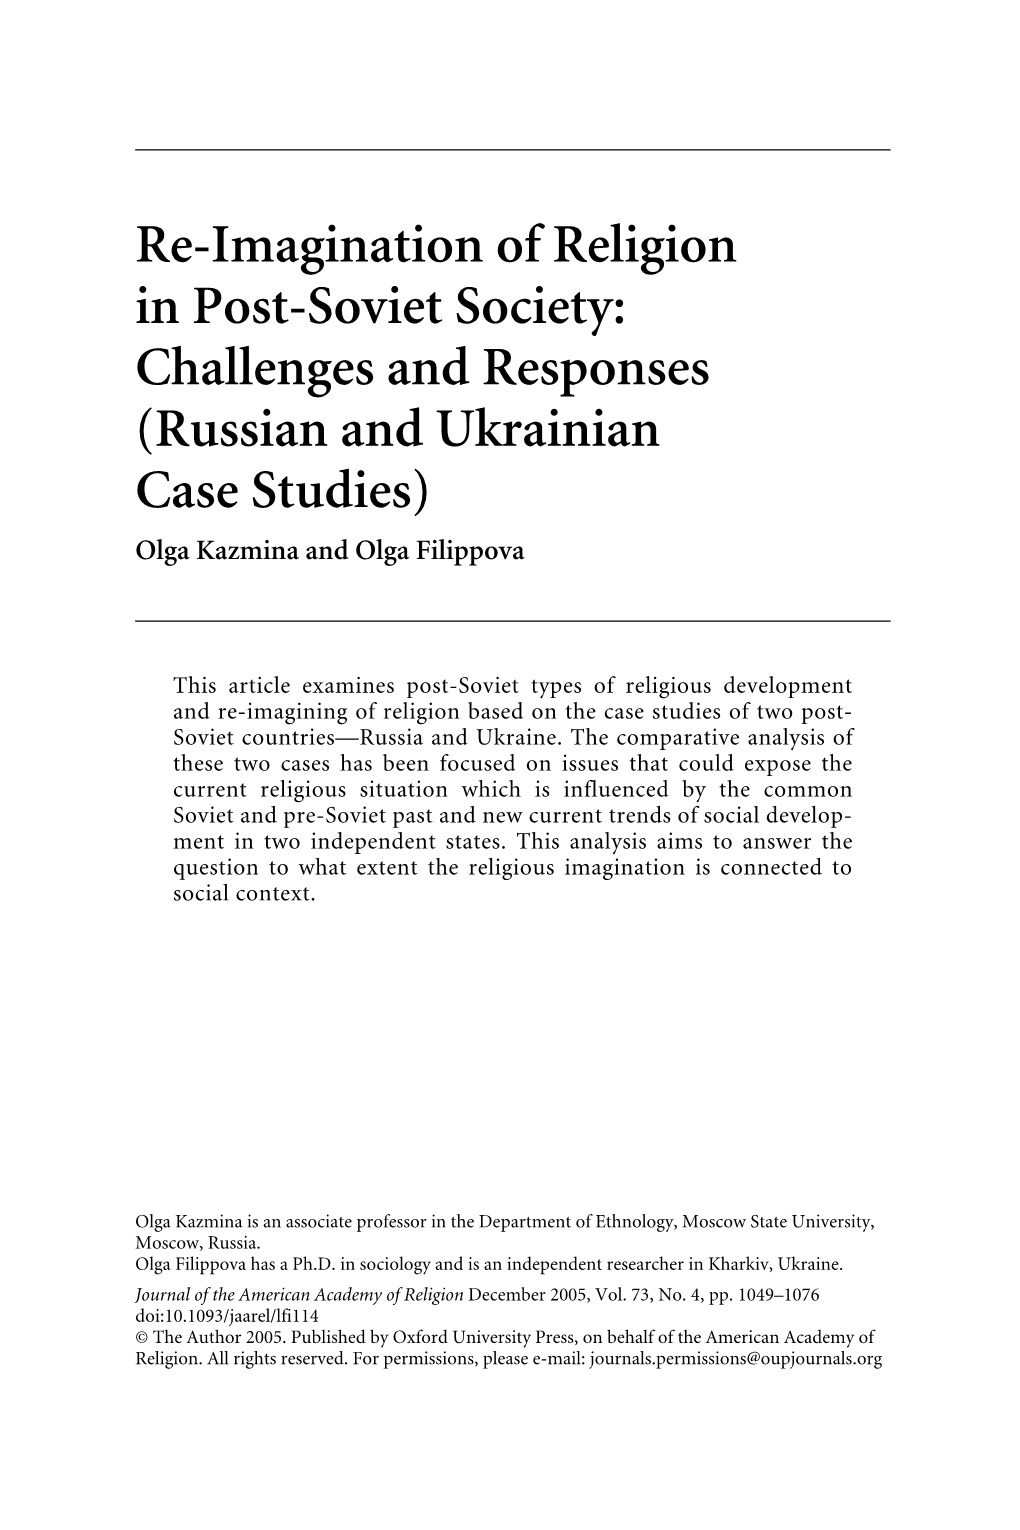 Re-Imagination of Religion in Post-Soviet Society: Challenges and Responses (Russian and Ukrainian Case Studies) Olga Kazmina and Olga Filippova